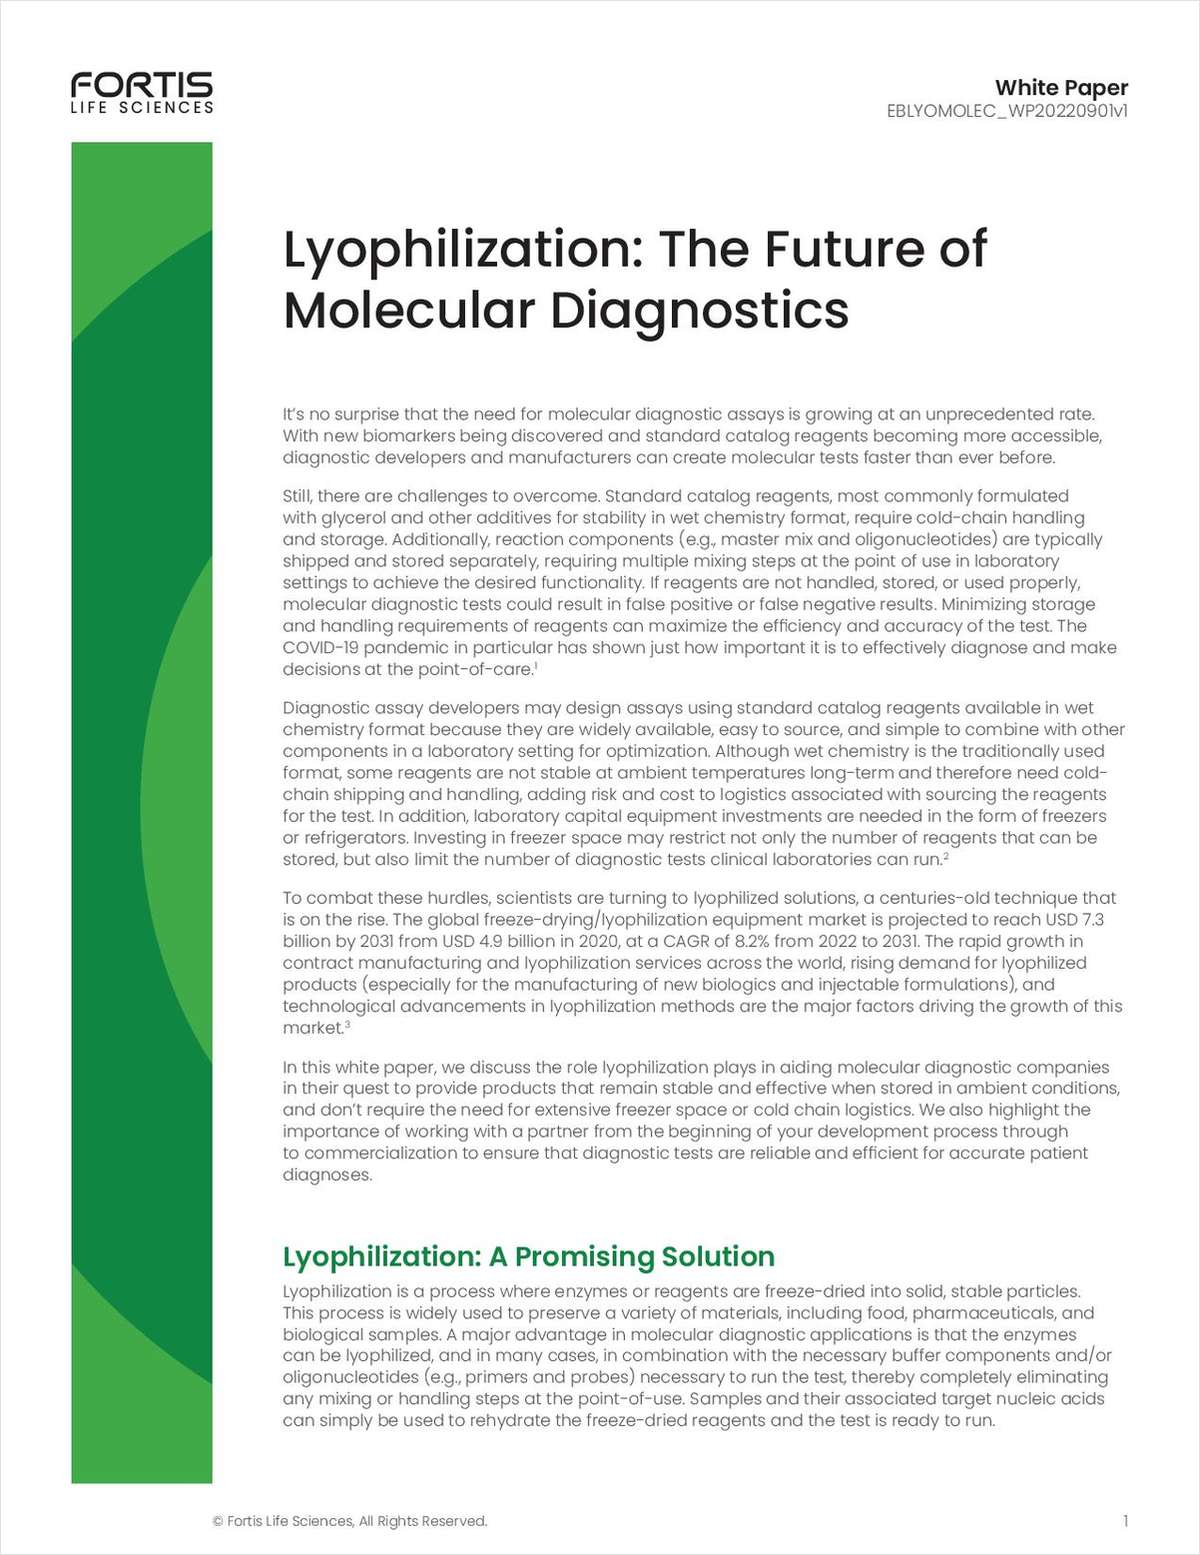 Lyophilization: The Future of Molecular Diagnostics